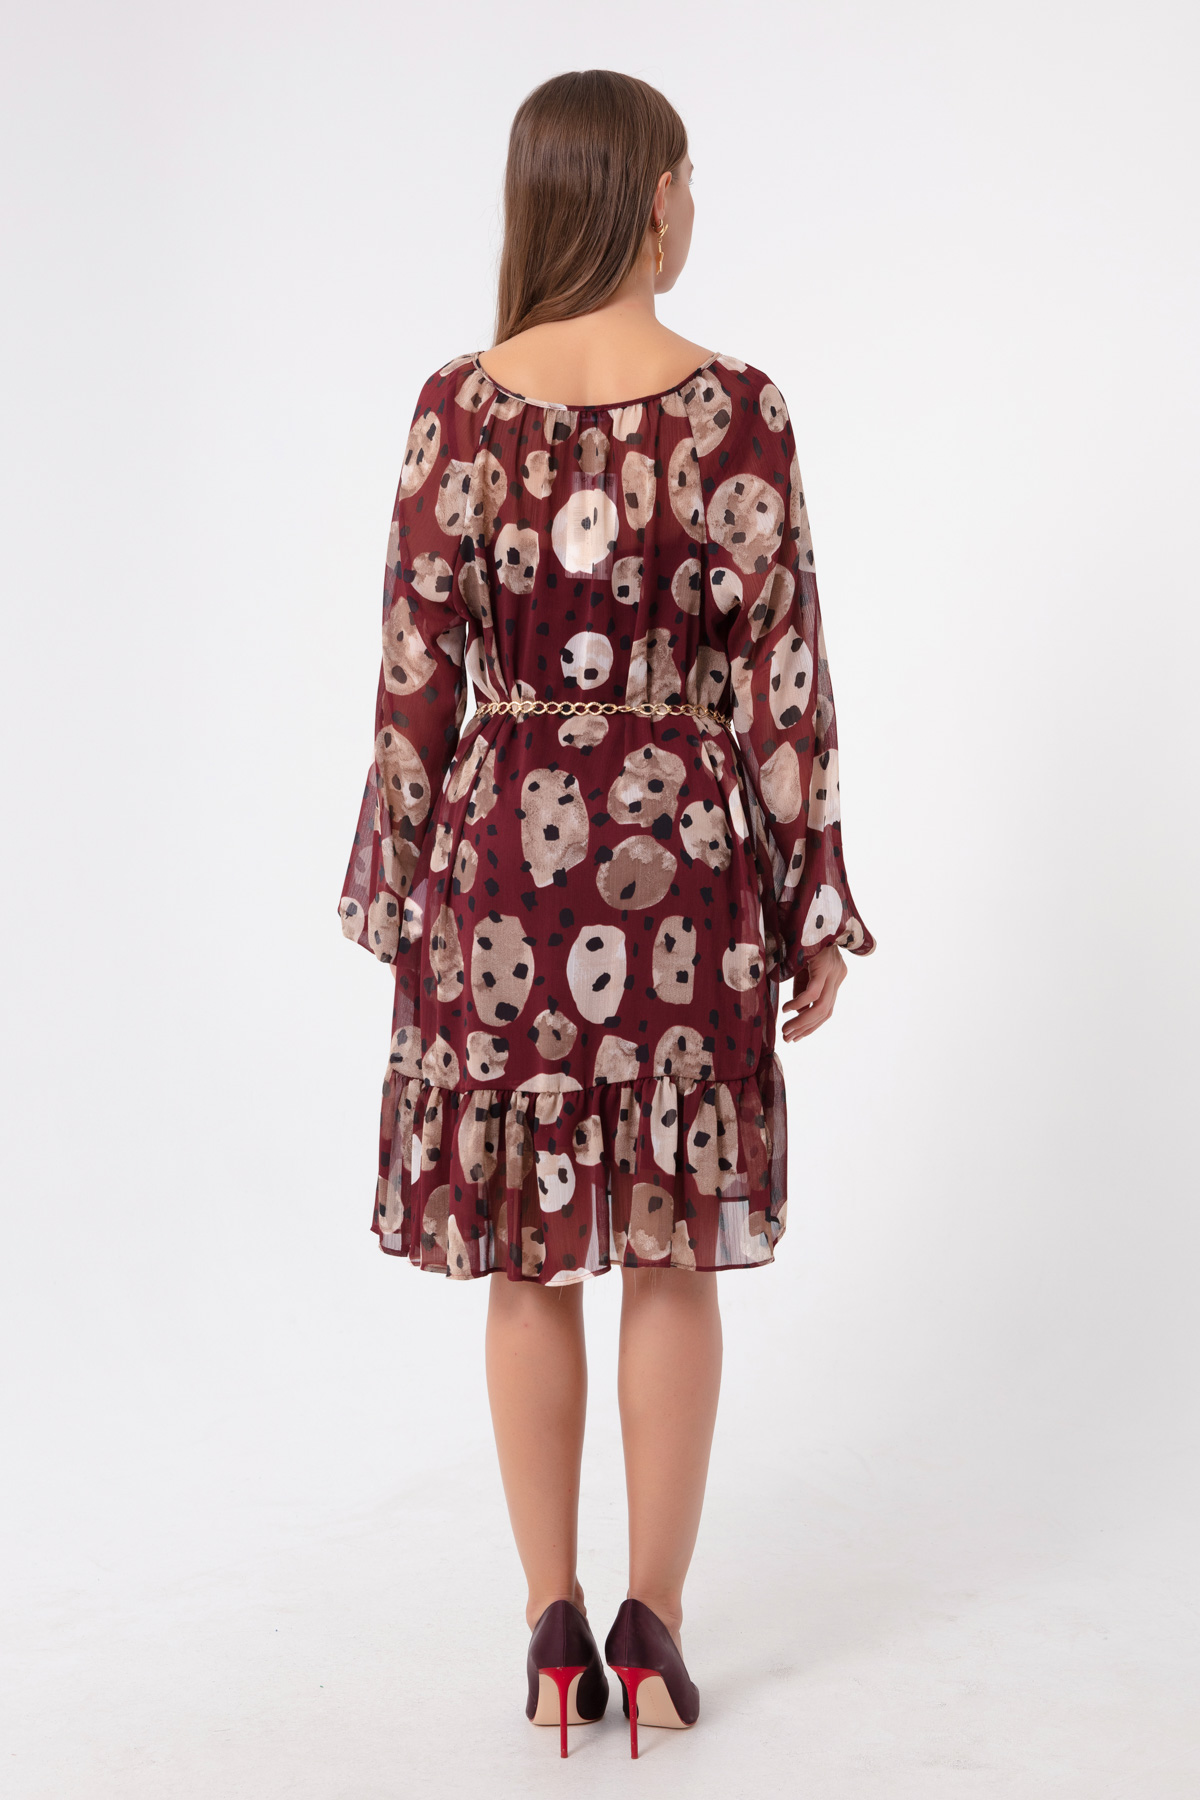 Women's Burgundy Patterned Dress